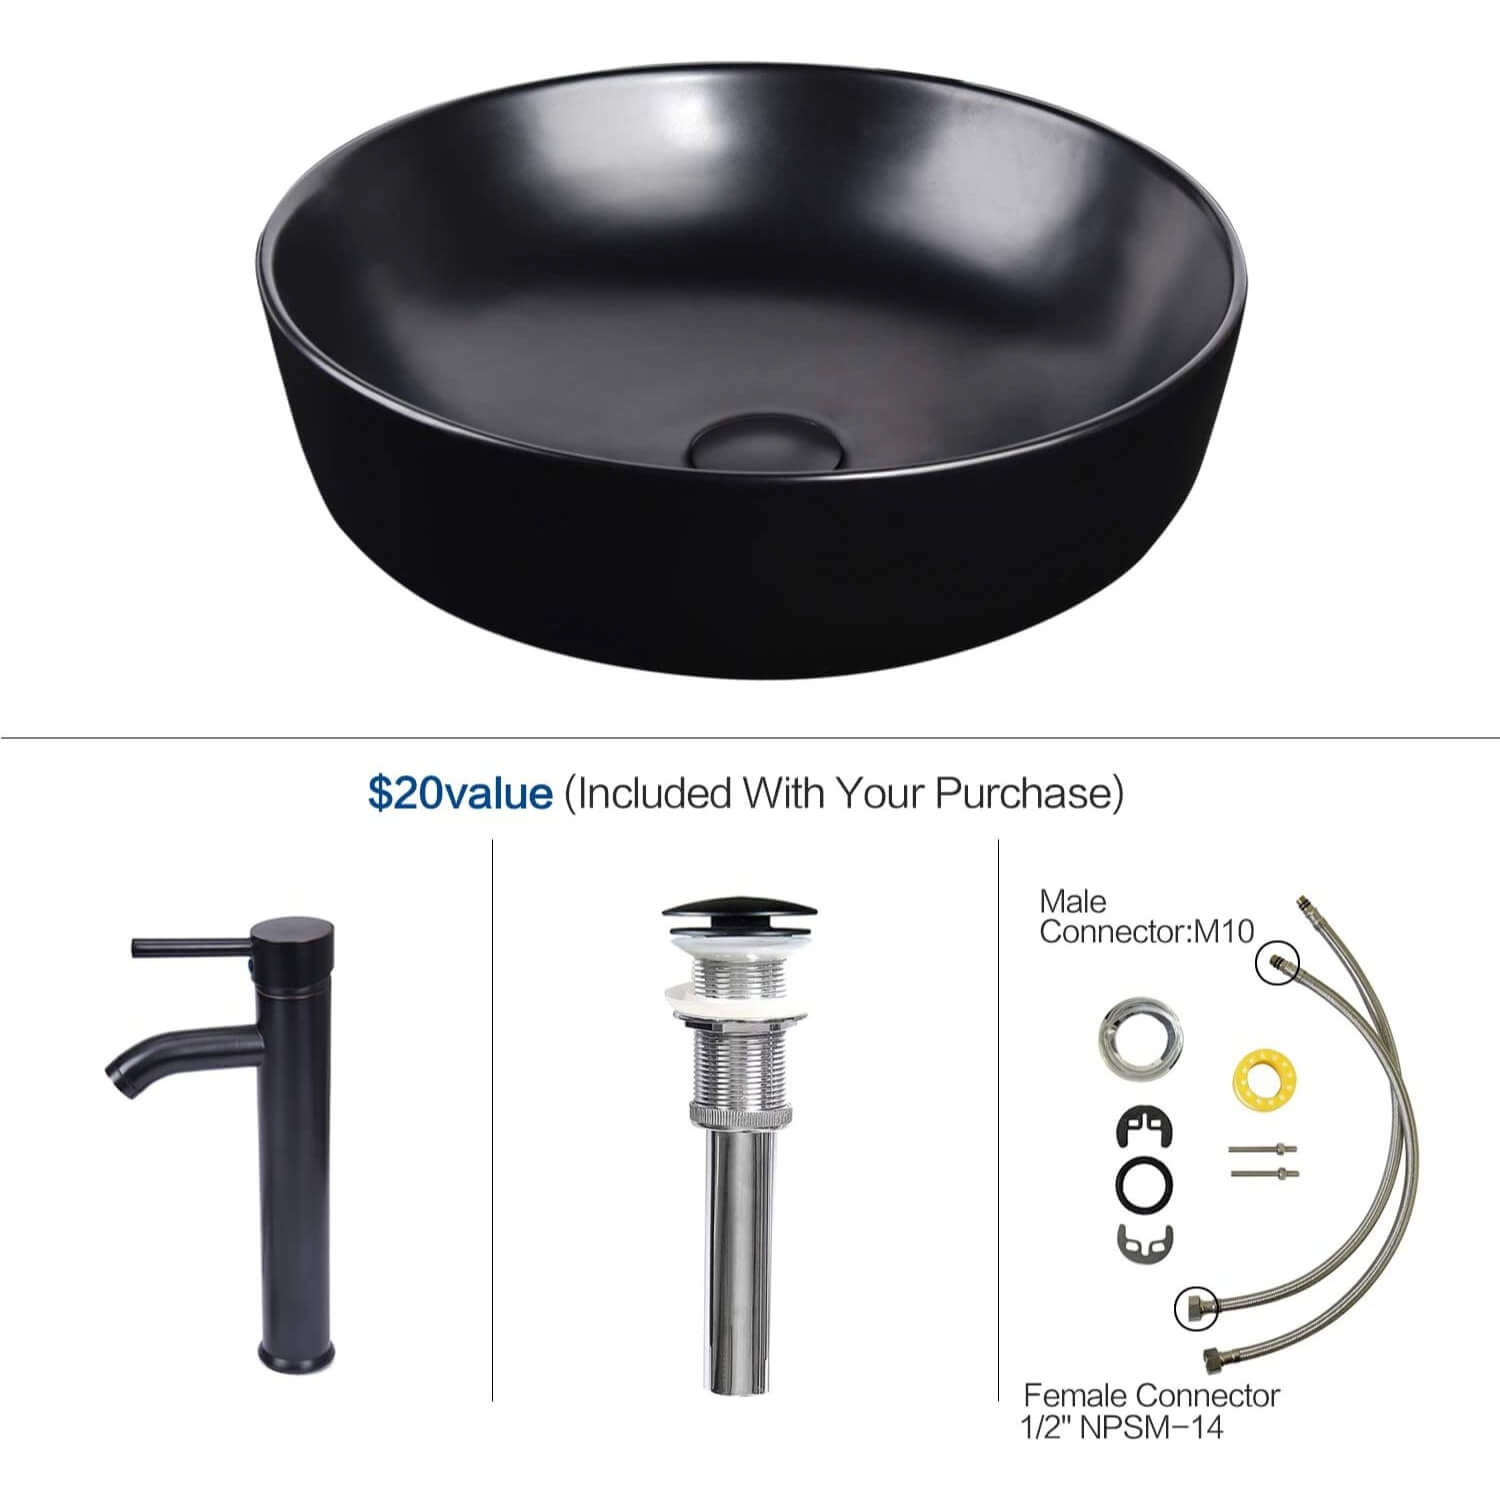 Elecwish black ceramic round sink included parts